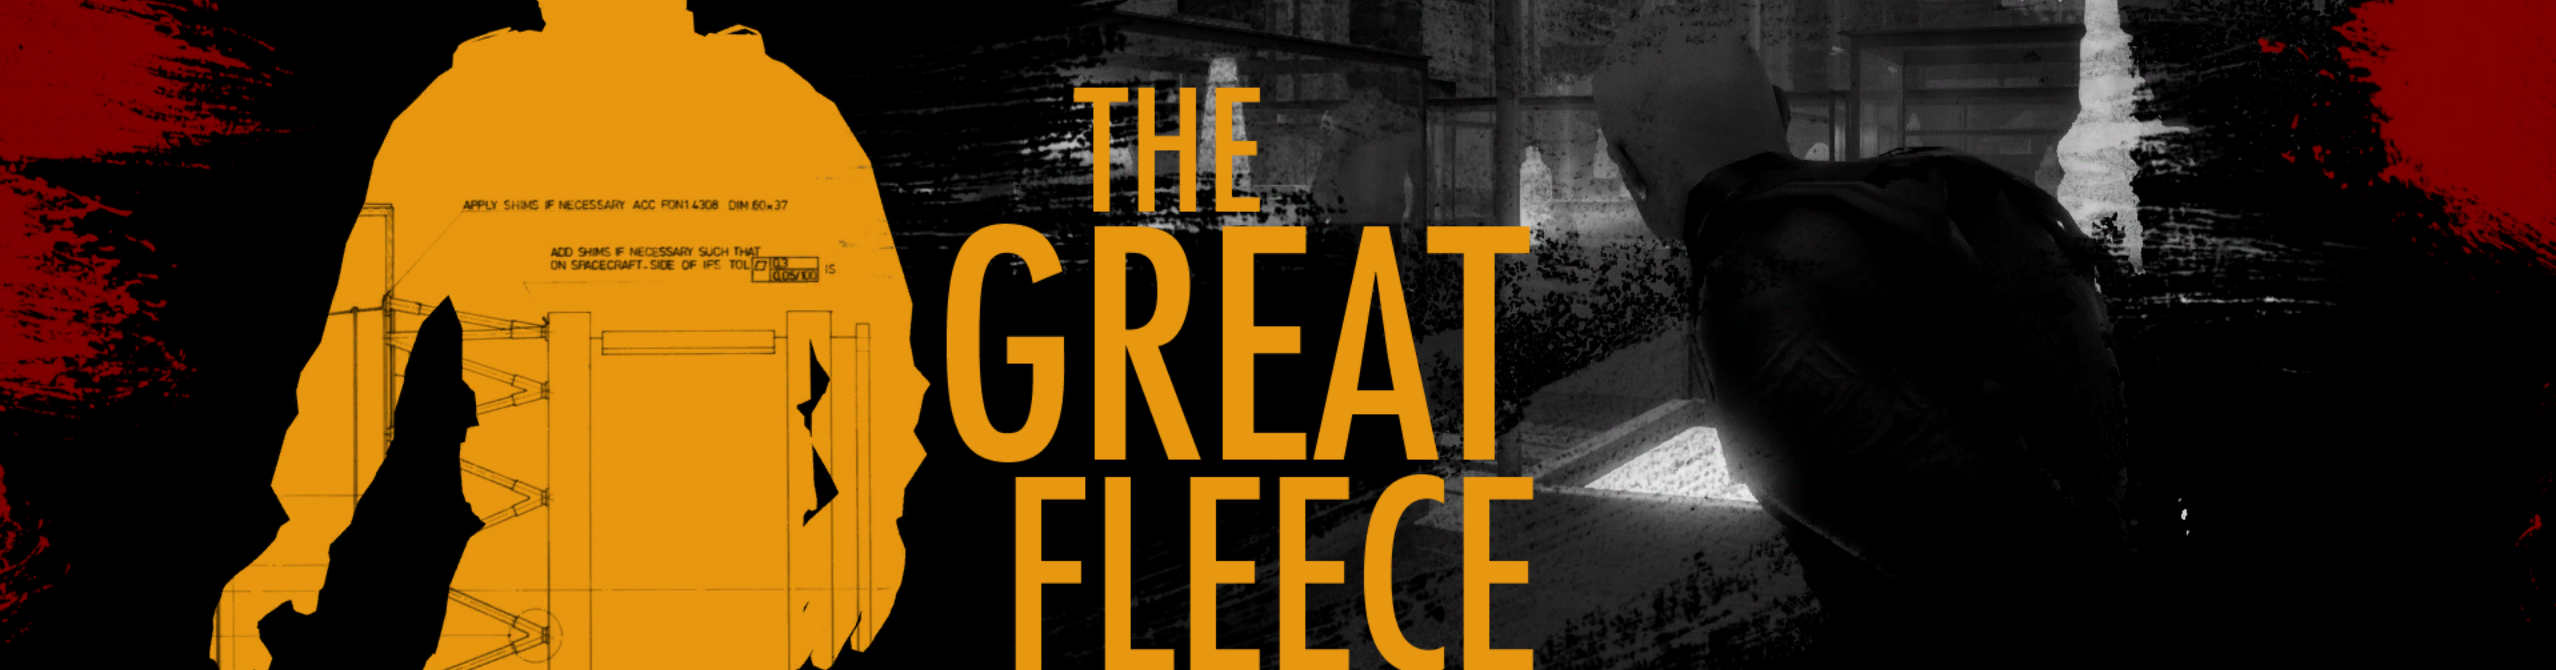 The Great Fleece